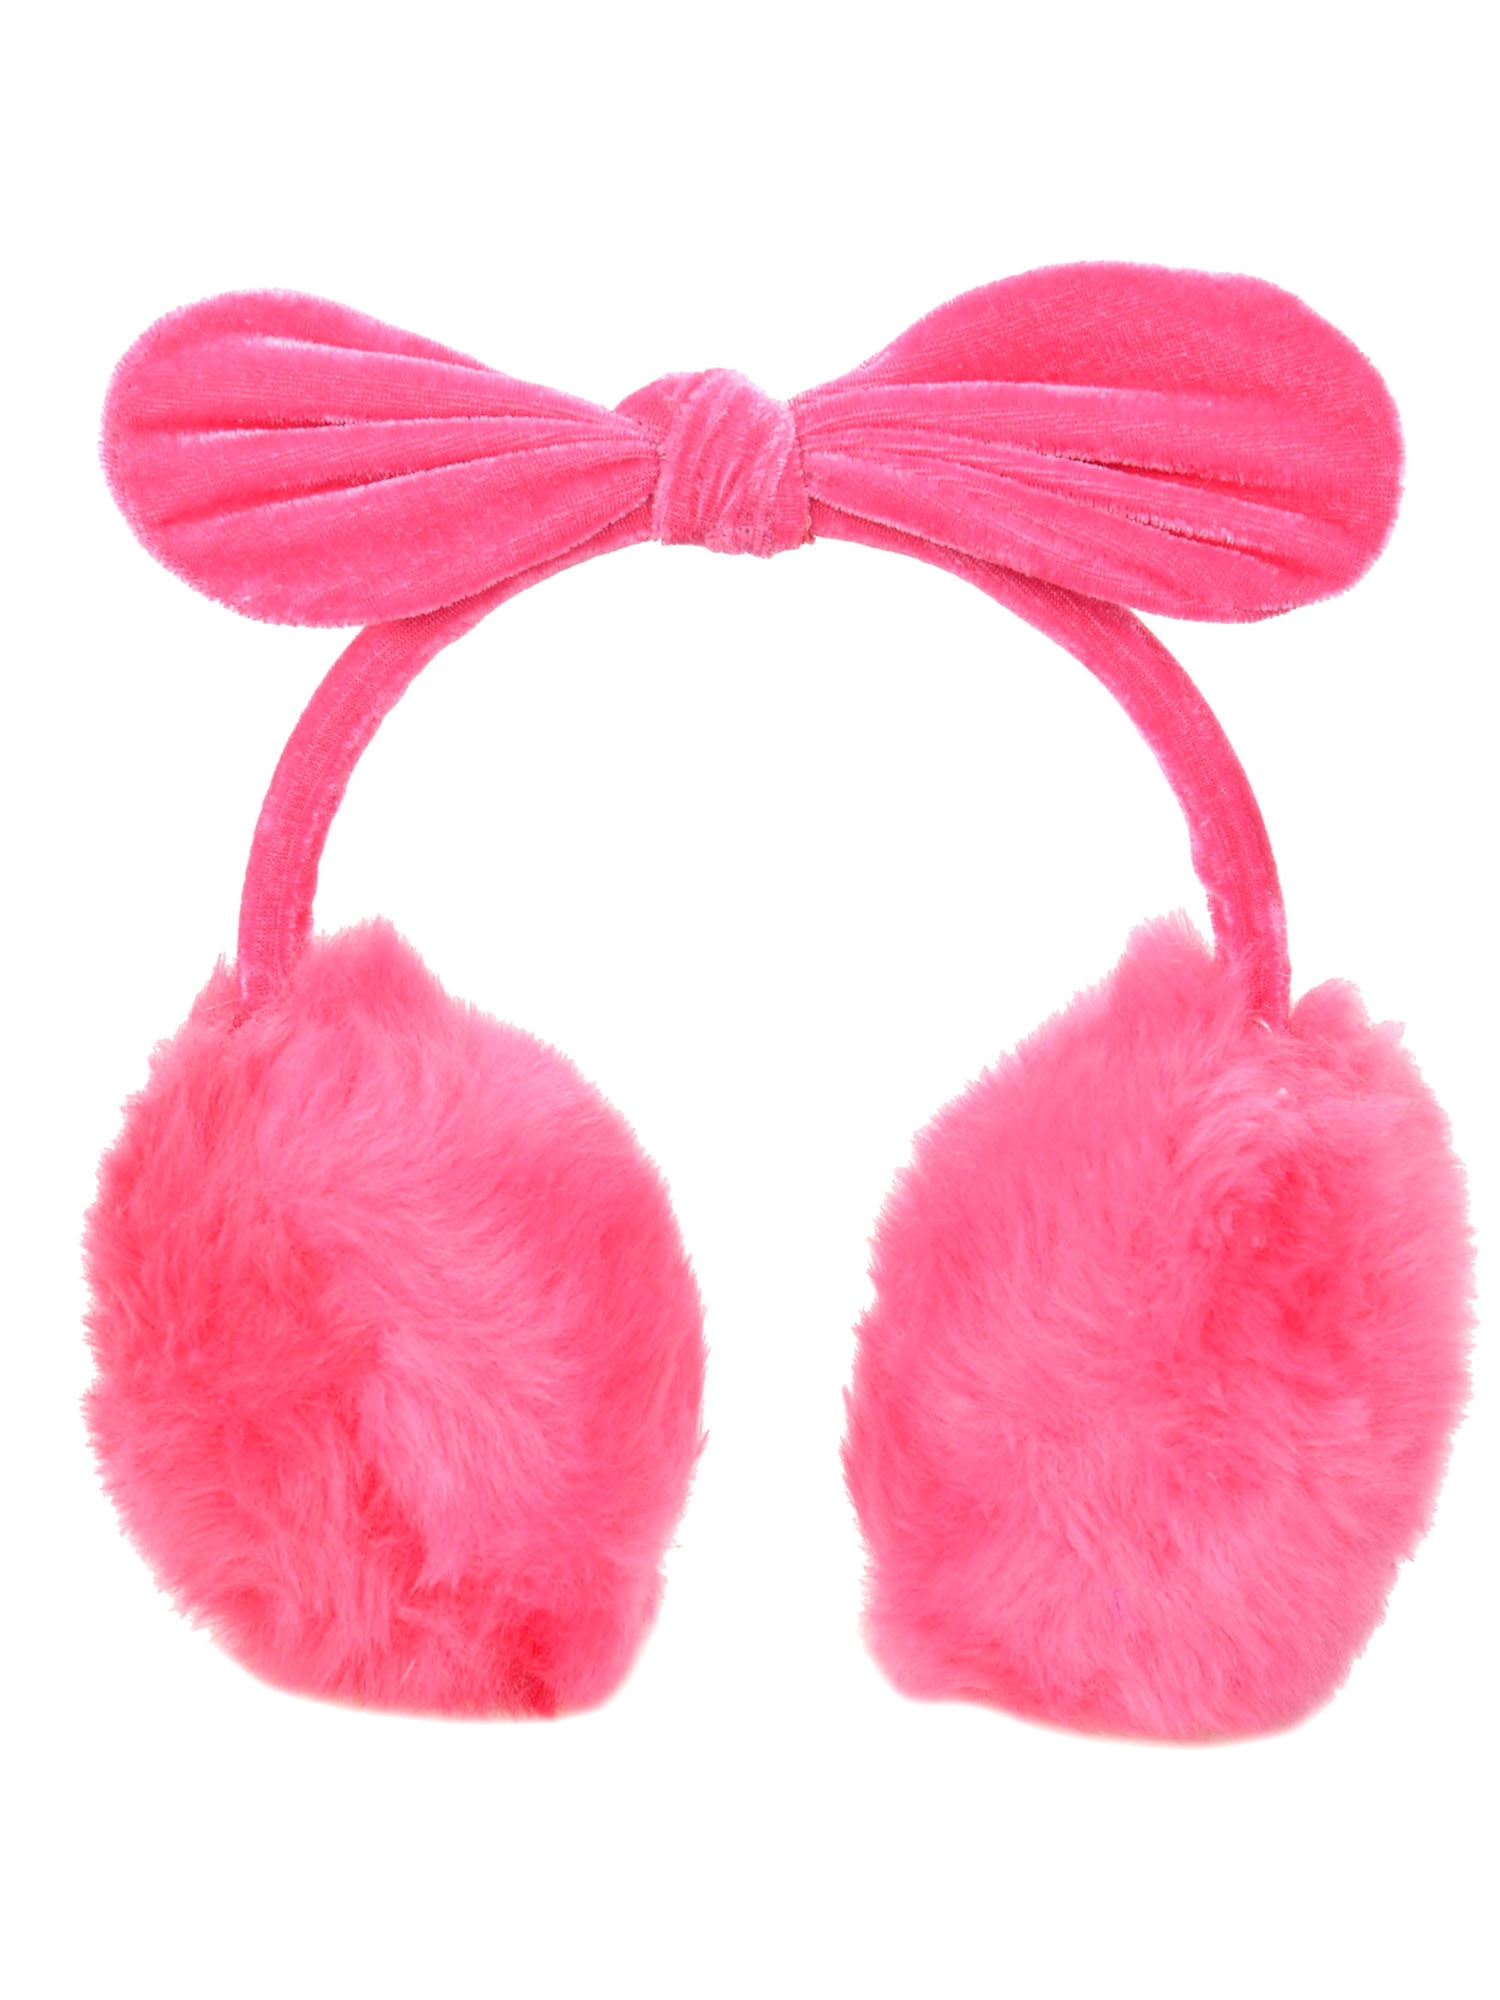 QZUnique Cute Animal Earmuffs Soft Plush Adjustable Ear Warmers Foldable Winter Outdoor Warm Ear Covers for Kids Girls Women 